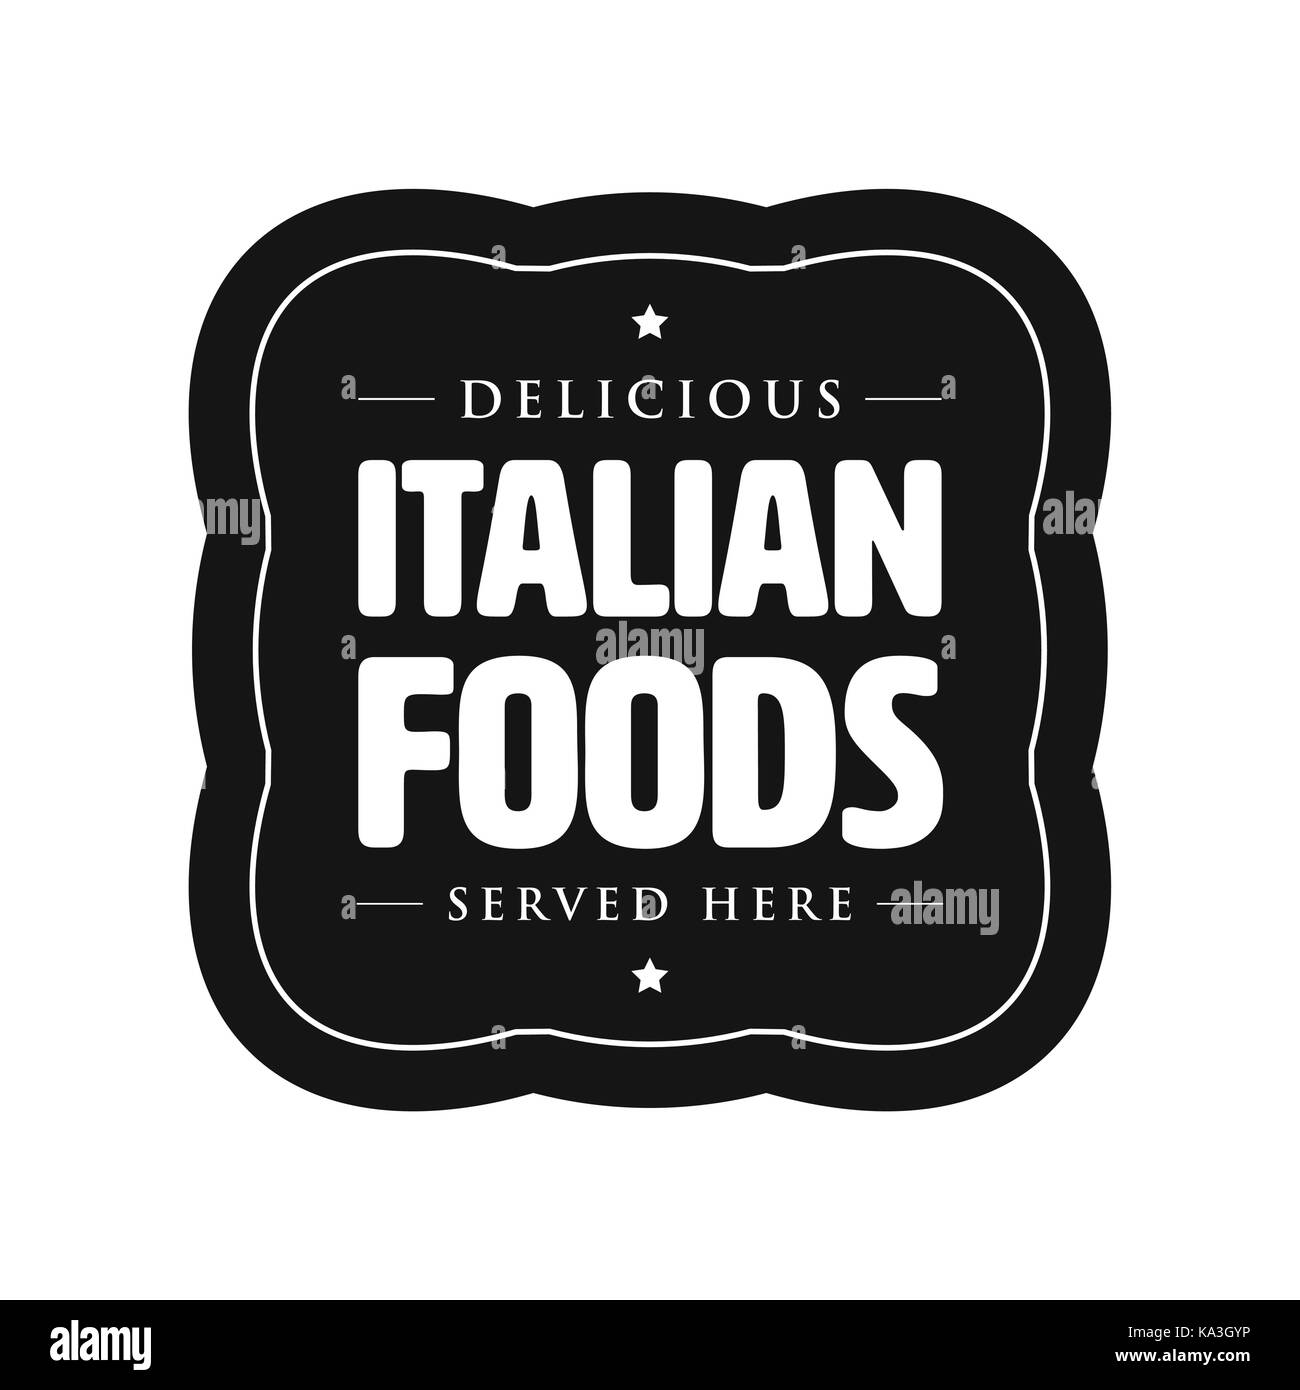 Italian foods vintage sign retro Stock Vector